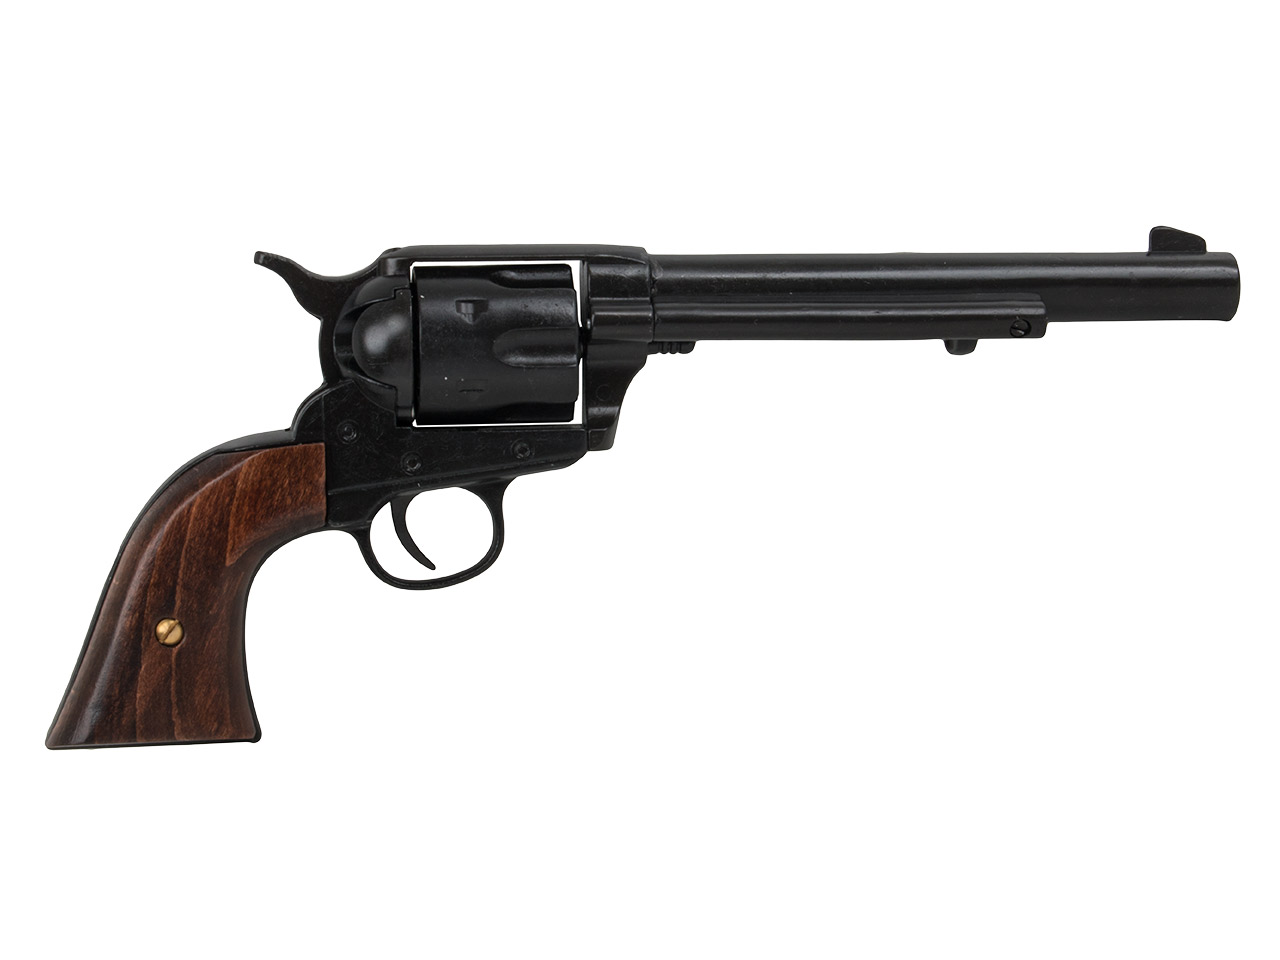 <b>Set 2</b> Western Revolvergurt rechts 90 cm 2 Holster hellbraun und 2 Deko Revolver Kolser Colt SAA .45 Peacemaker 5,5 Zoll schwarz